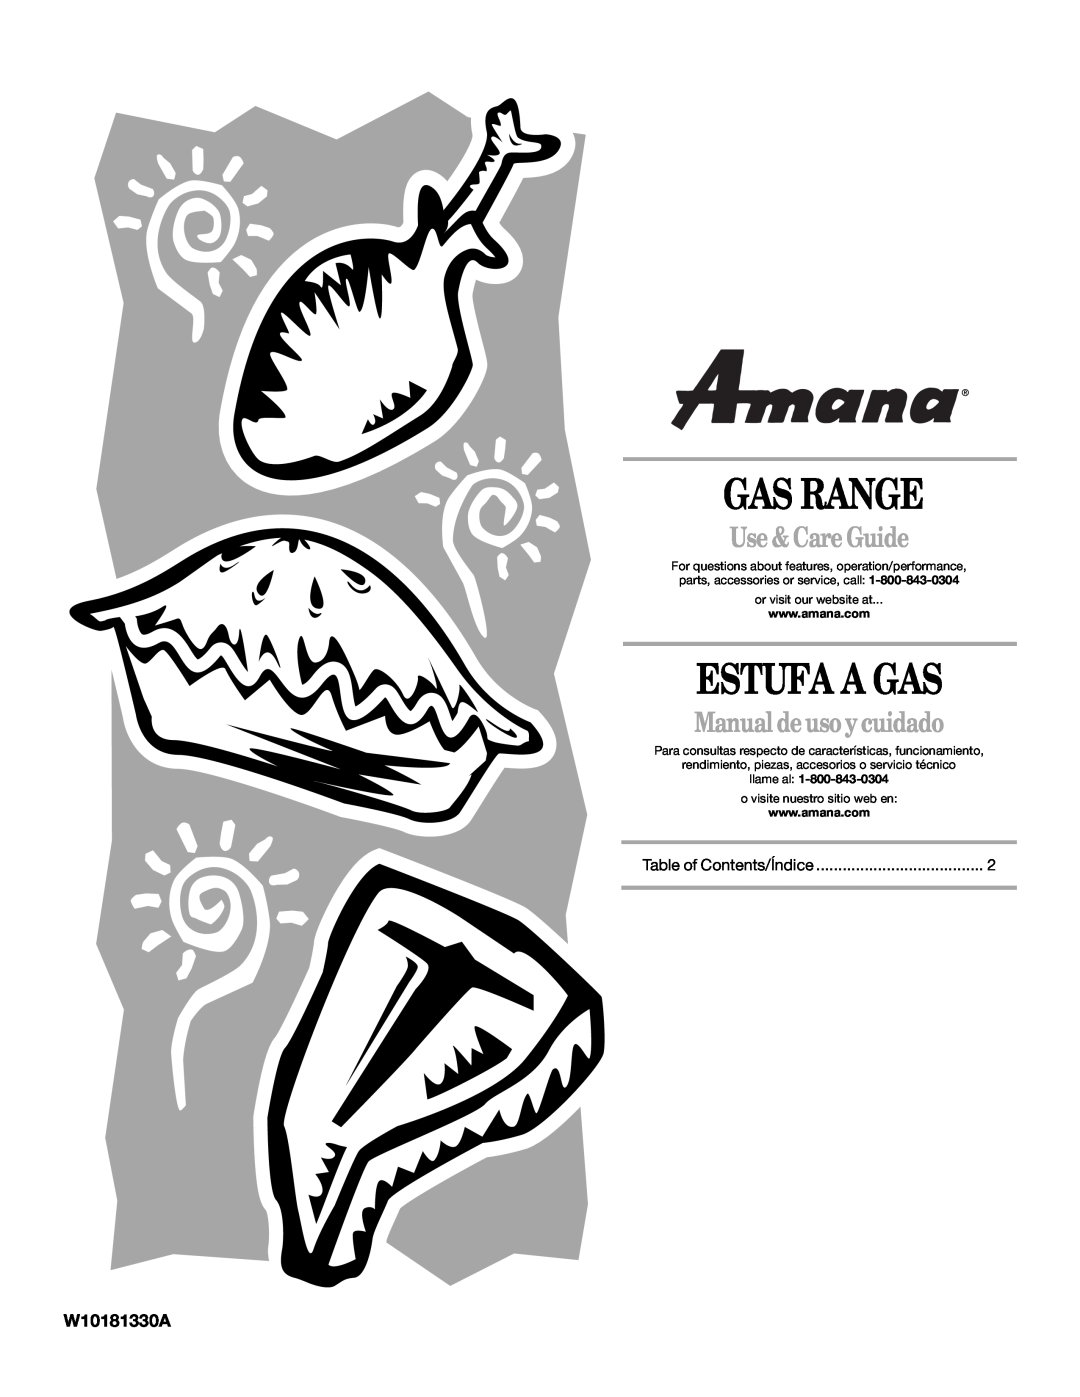 Amana W10181330A manual Gas Range, Estufa A Gas, Use & Care Guide, Manual deuso ycuidado, or visit our website at 